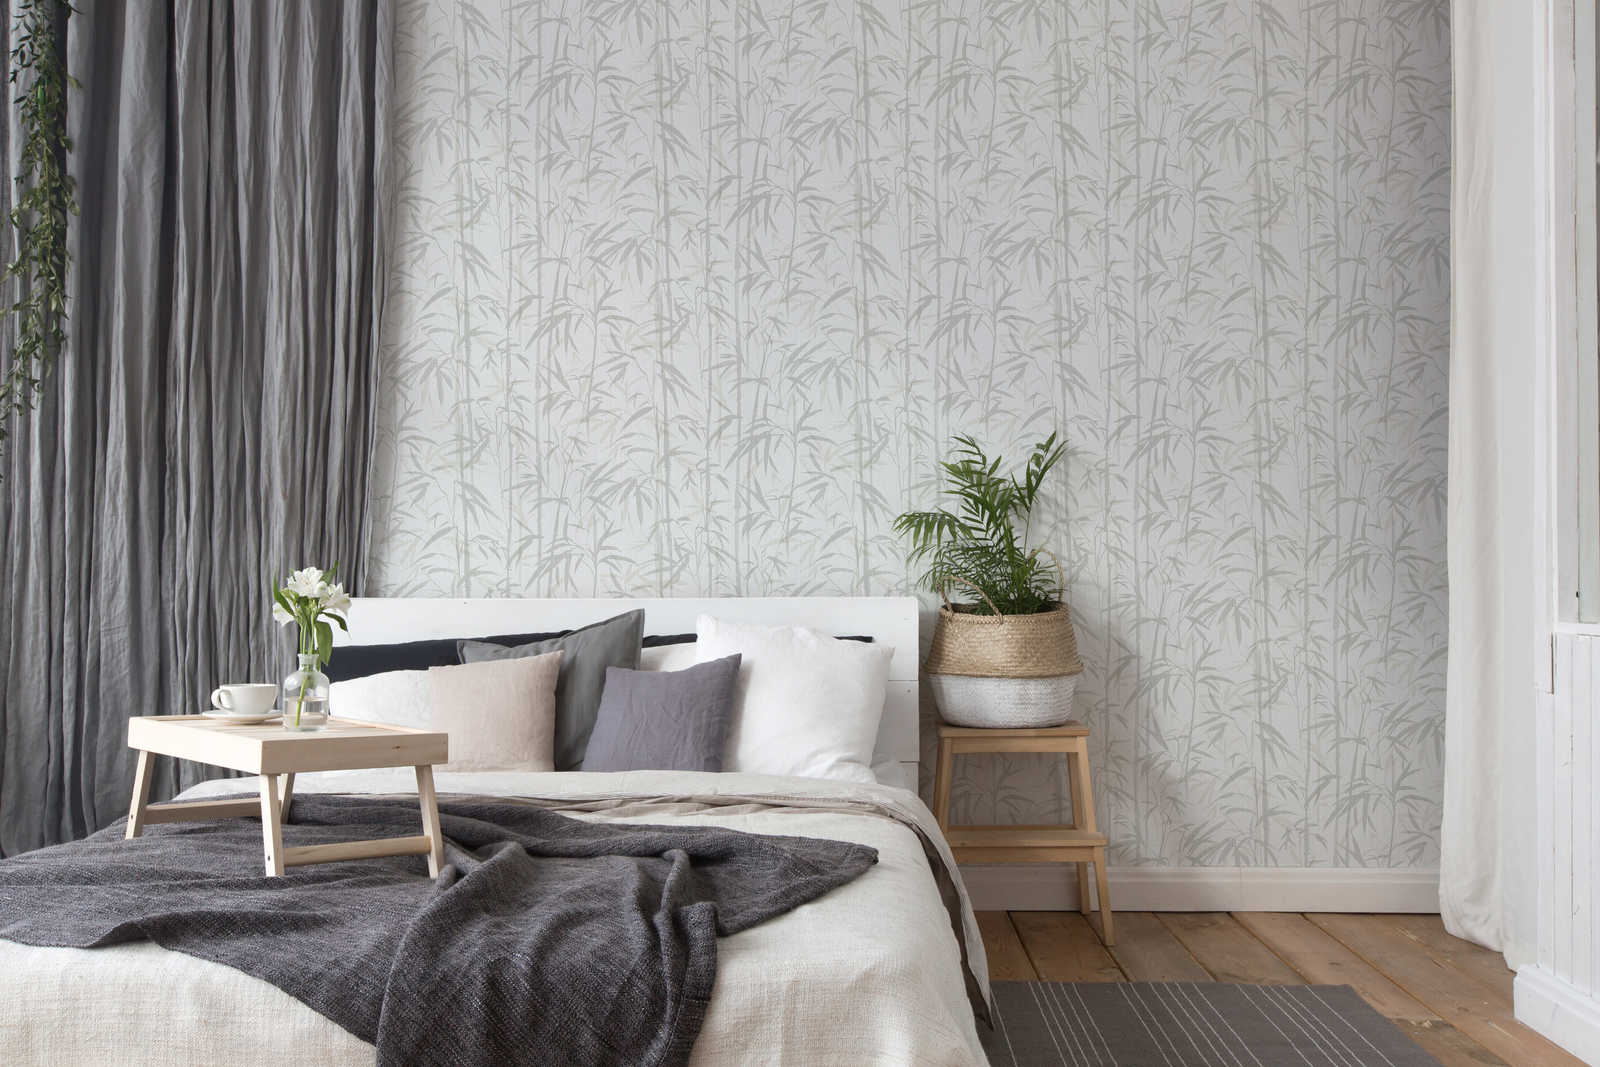             MICHALSKY non-woven wallpaper natural bamboo pattern - beige, cream
        